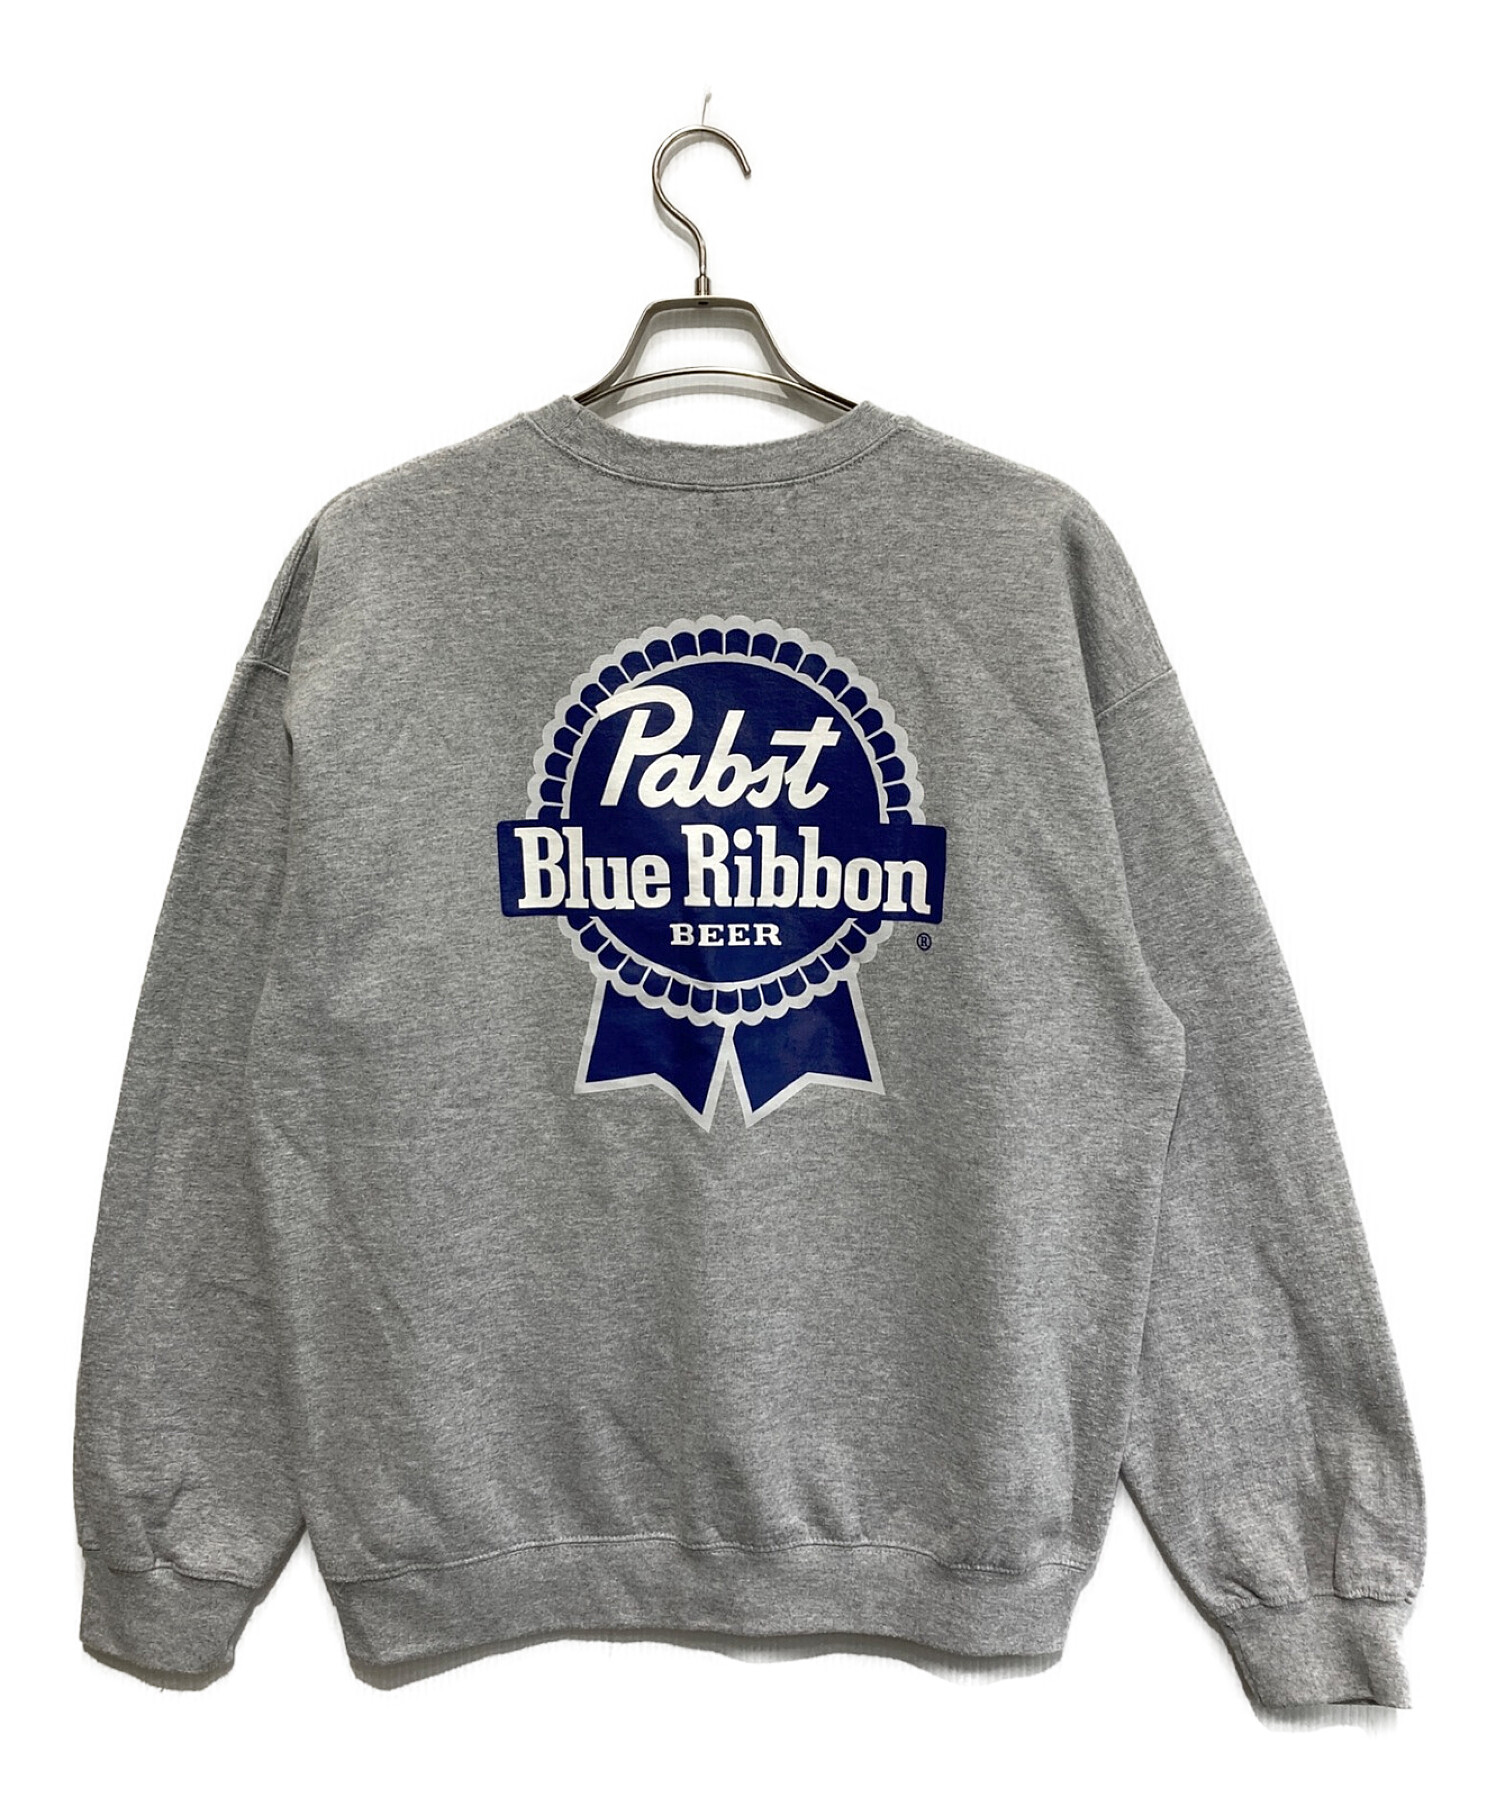 Pabst Blue Ribbon (パブストブルーリボン) プリントスウェット グレー×ブルー サイズ:SIZE L